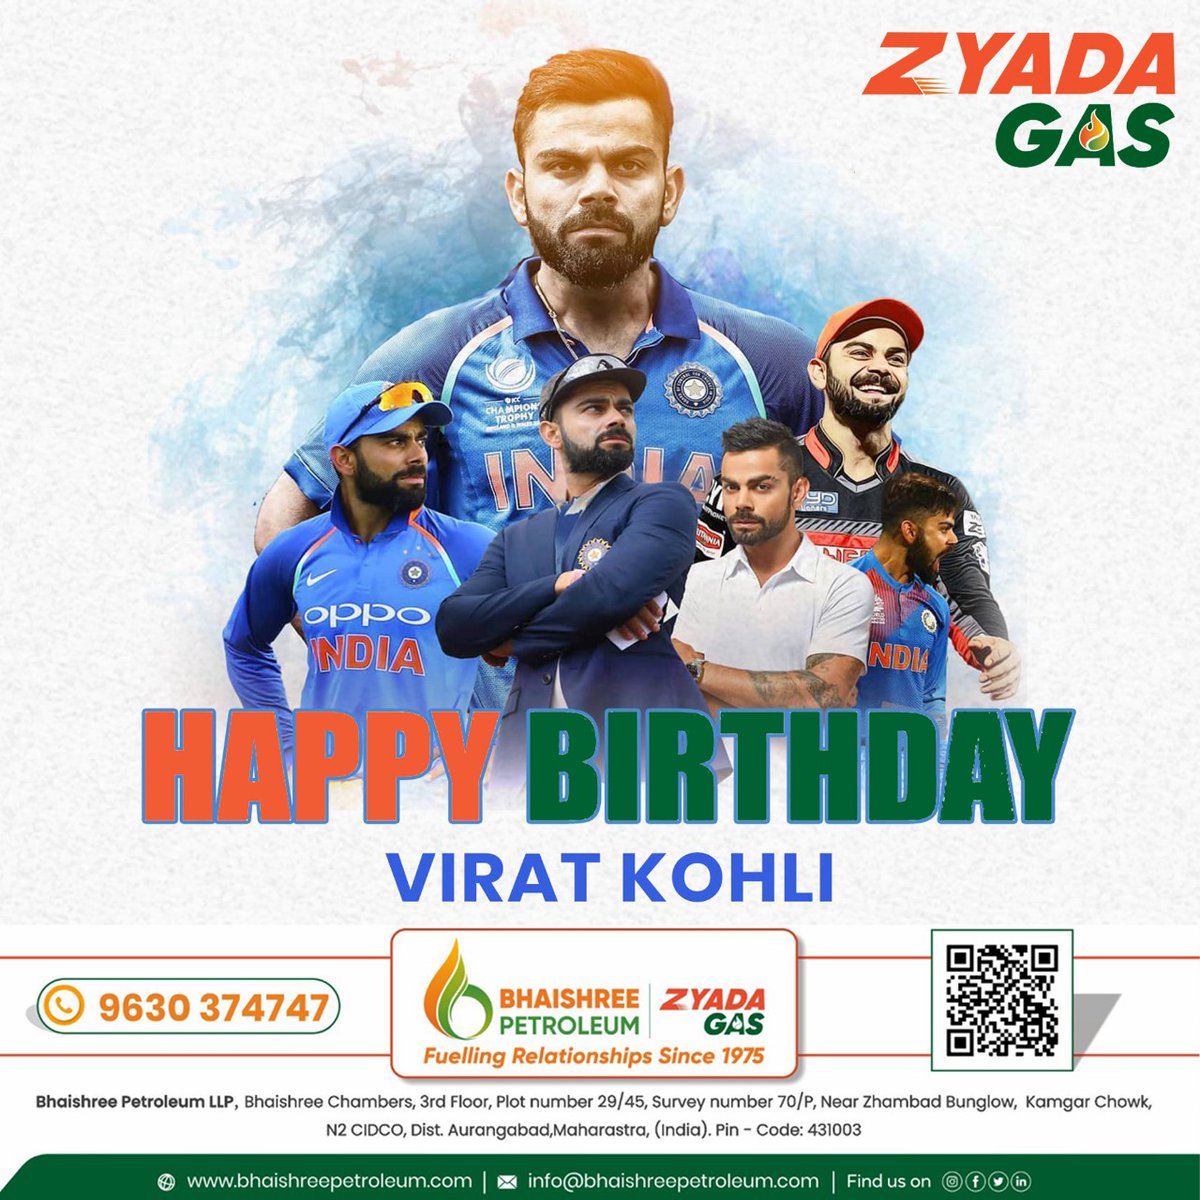 Happy Birthday Virat Kohali
                         Zyada Gas...

#bhaishreeventure #zyadagasautolpg #bhaishreepetroleum #zyadakafayda #VikramTea #TeamIndia #gogreenorgohome #viratkohlifanpage